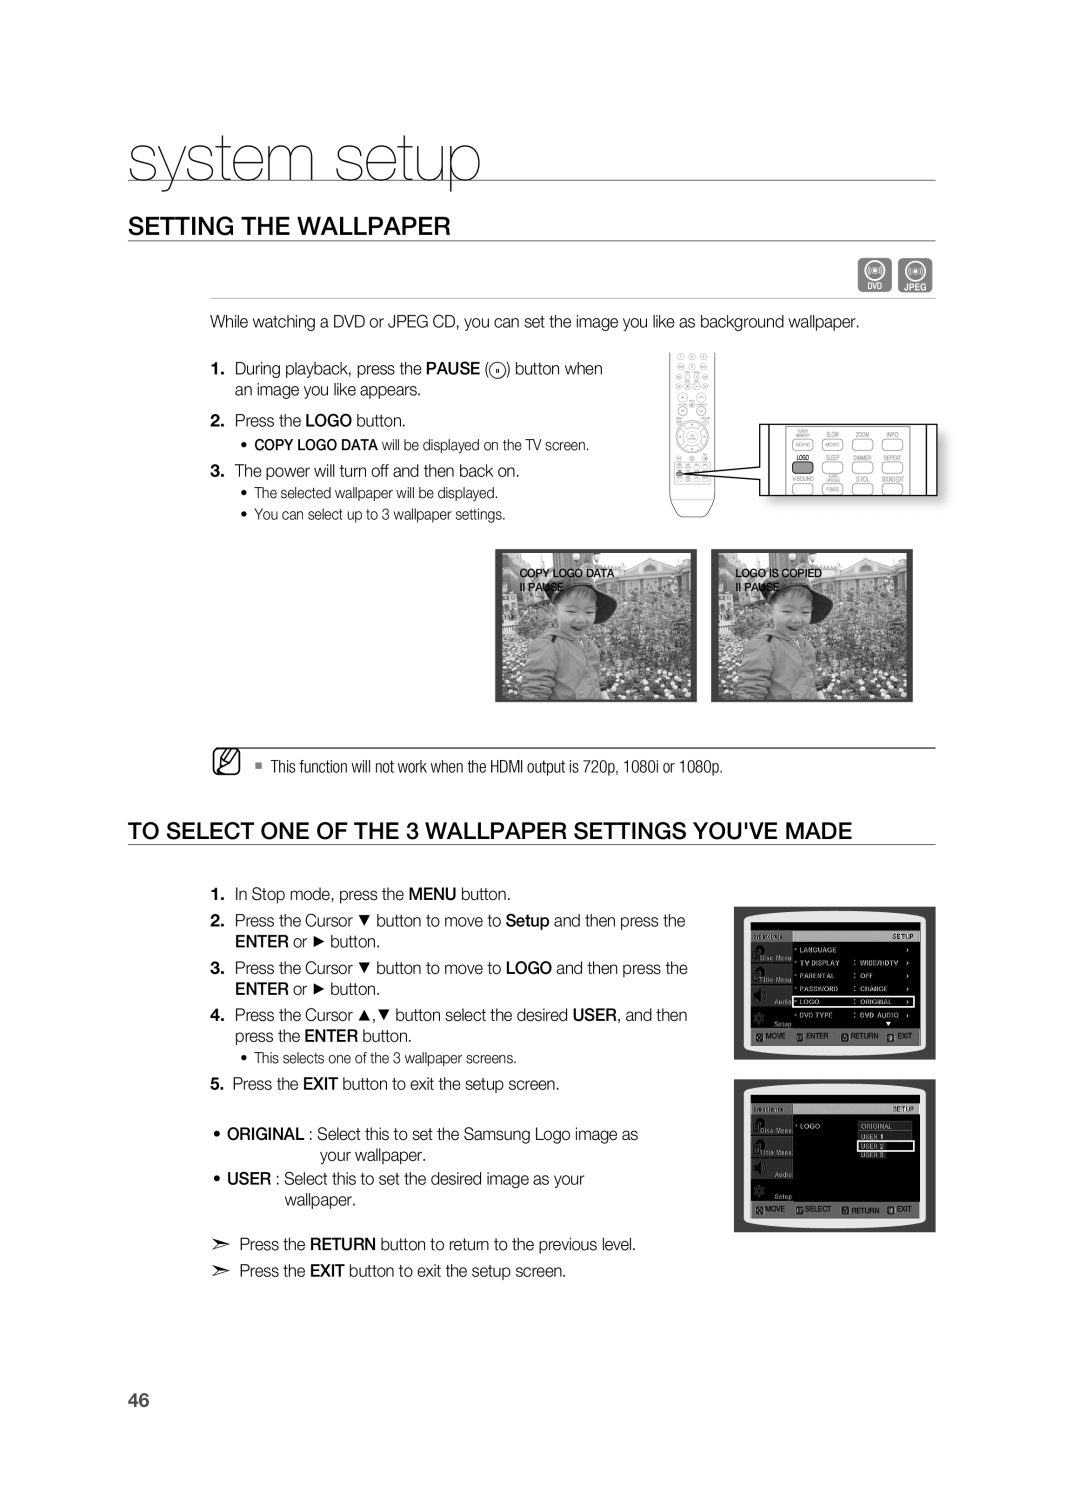 Samsung HT-X810 user manual SETTING THE WAllPAPEr, system setup 